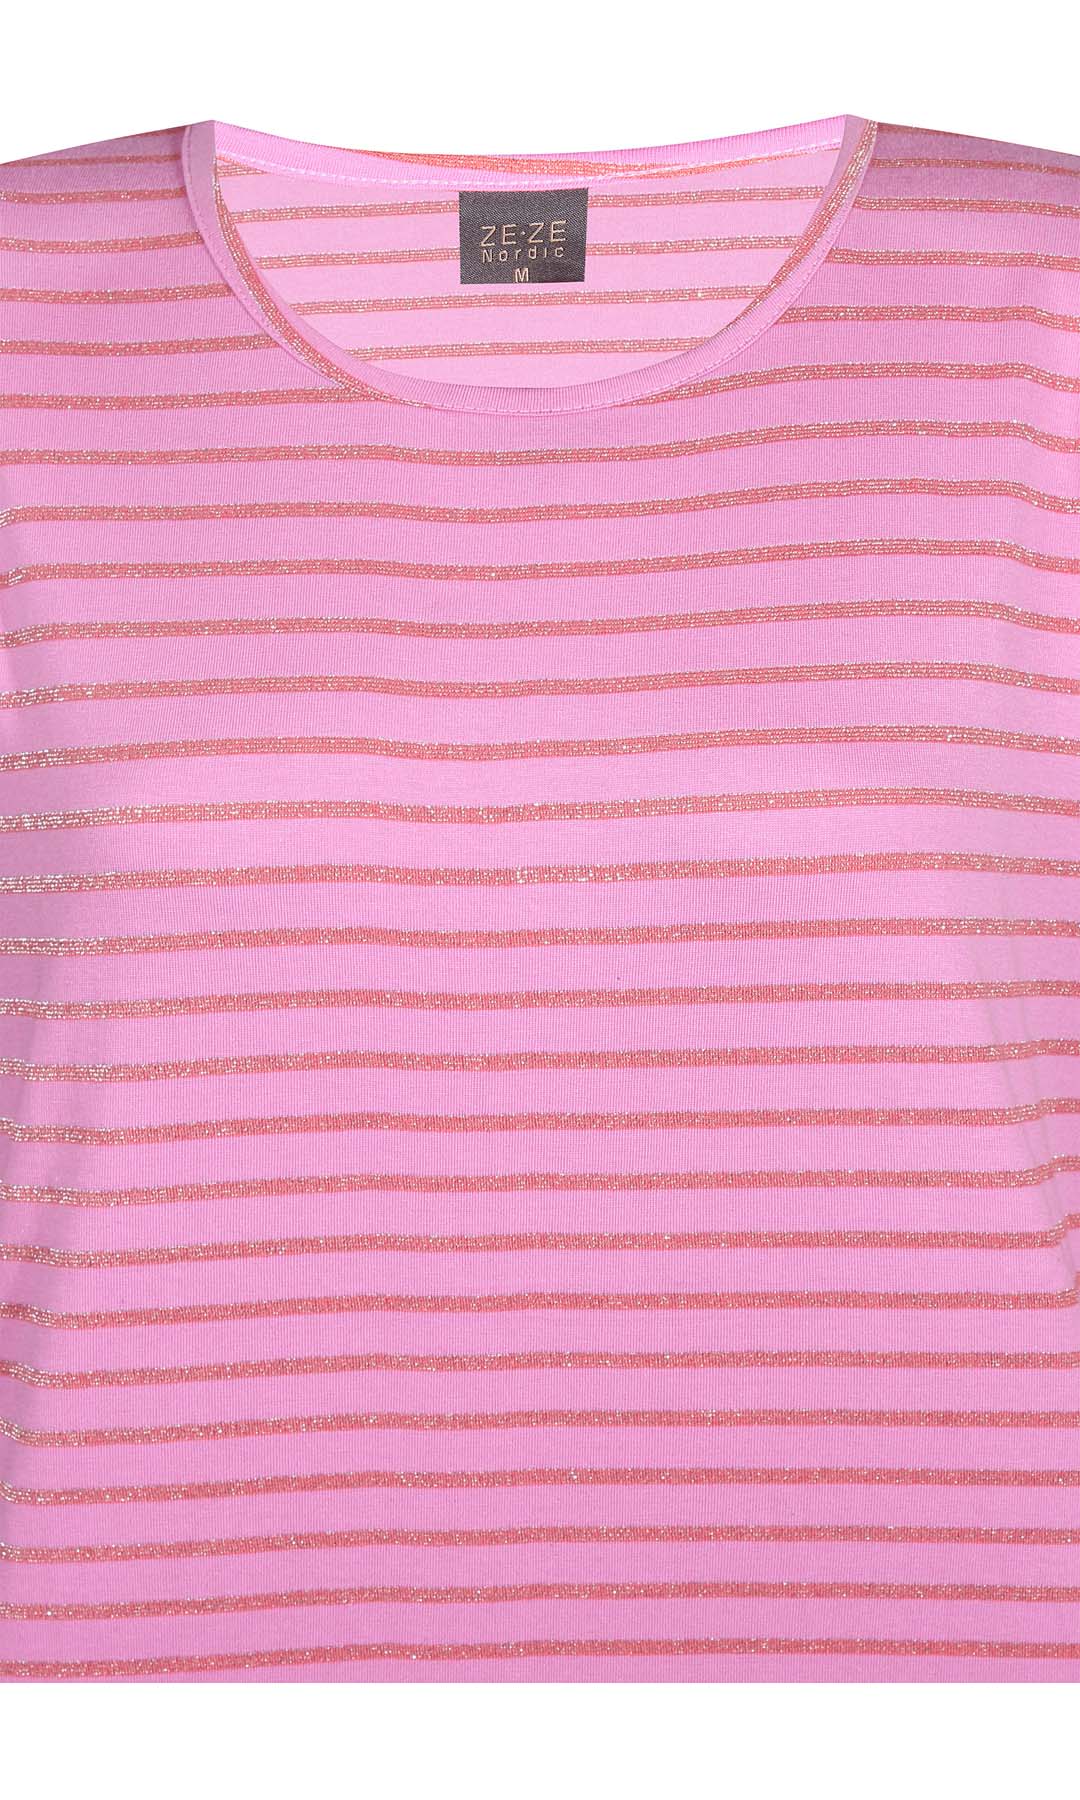 Elja 126 - T-shirt - Pink